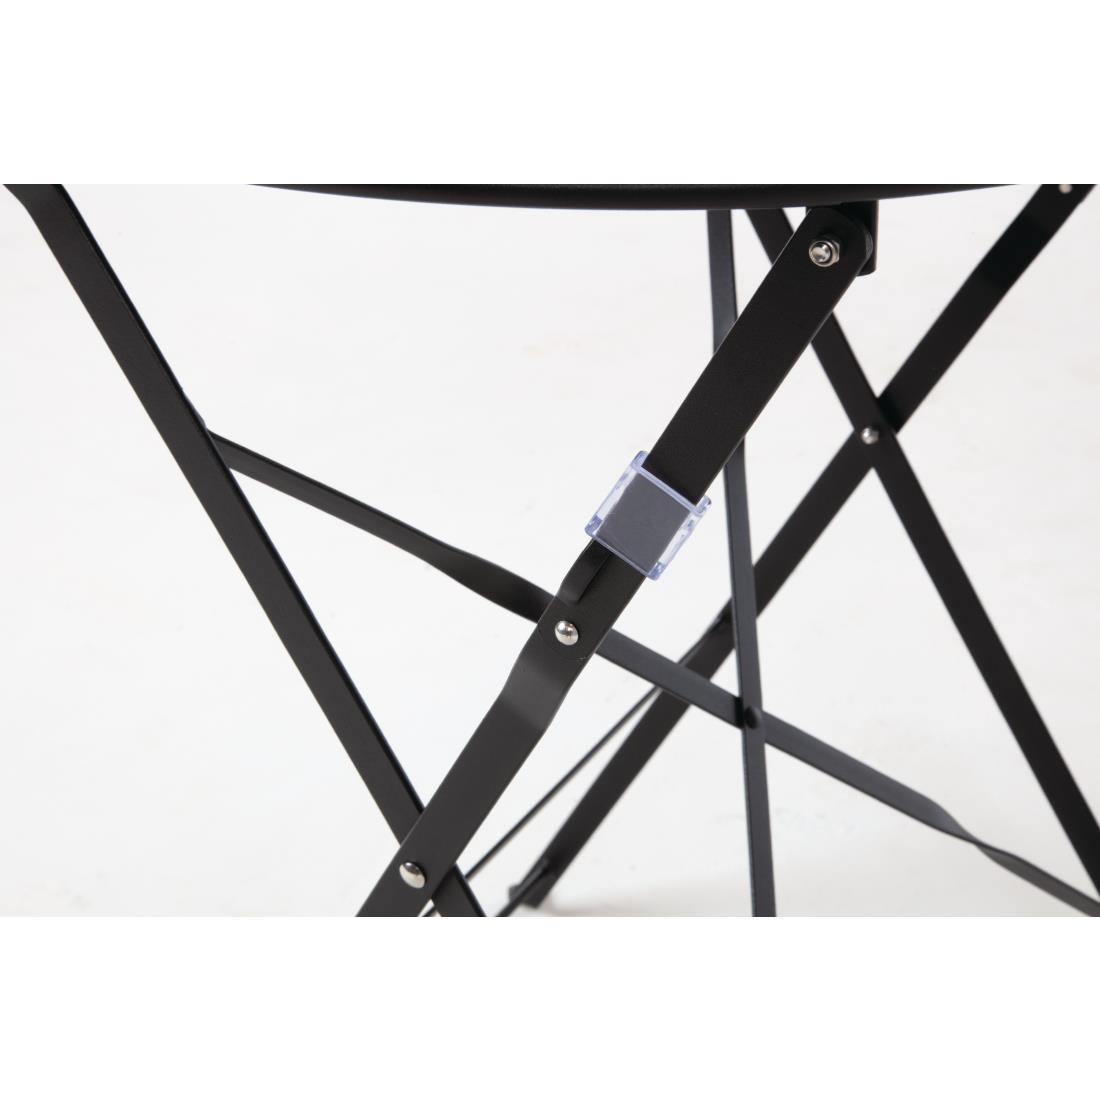 Bolero Black Pavement Style Steel Table 595mm - GH558  - 6